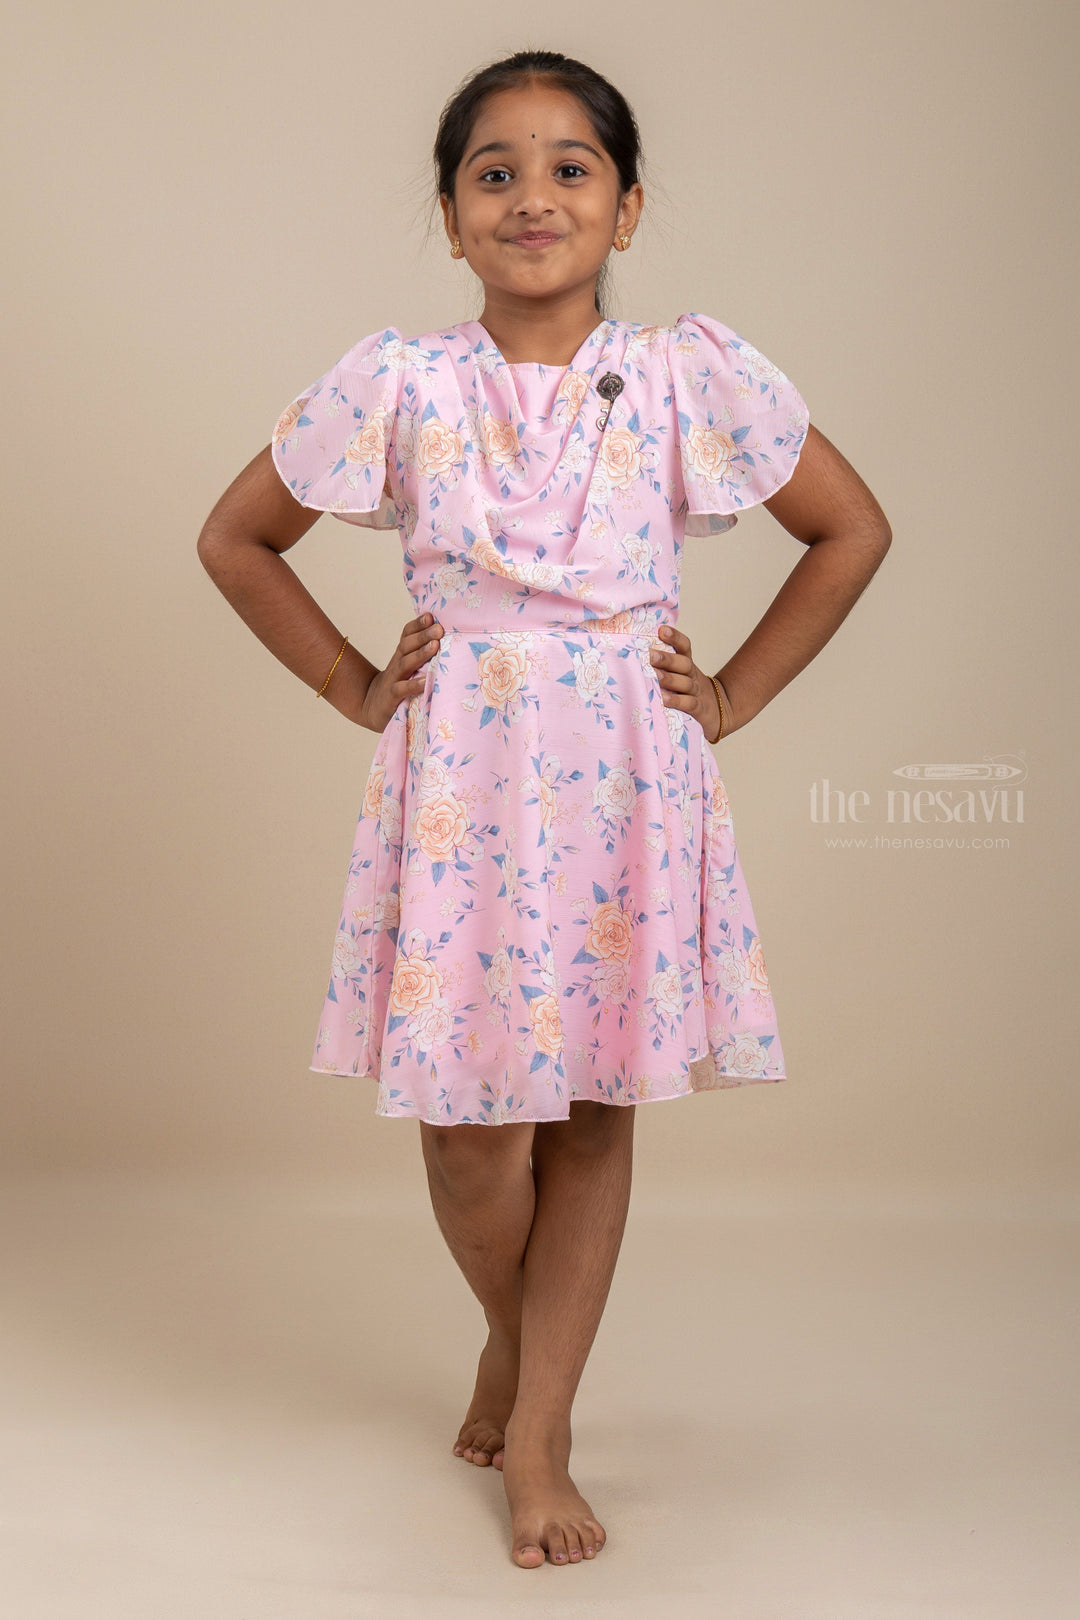 The Nesavu Girls Fancy Frock Pinkish Girl - Cute Pink Cotton Frocks For Little Girls Nesavu Cotton Frock Models| Cute Frocks For Girls| The Nesavu